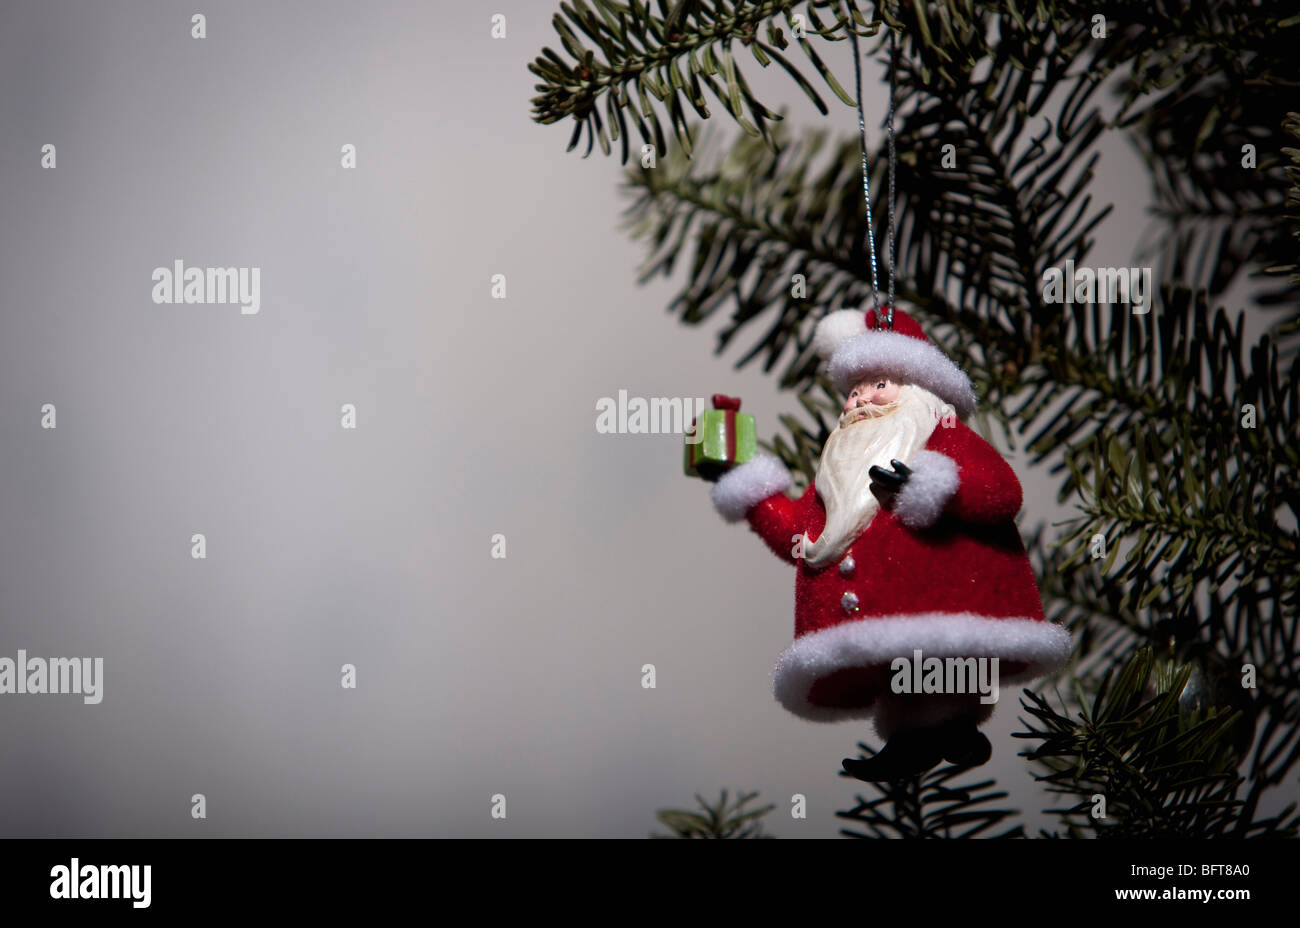 Santa Claus Christmas Ornament Stock Photo